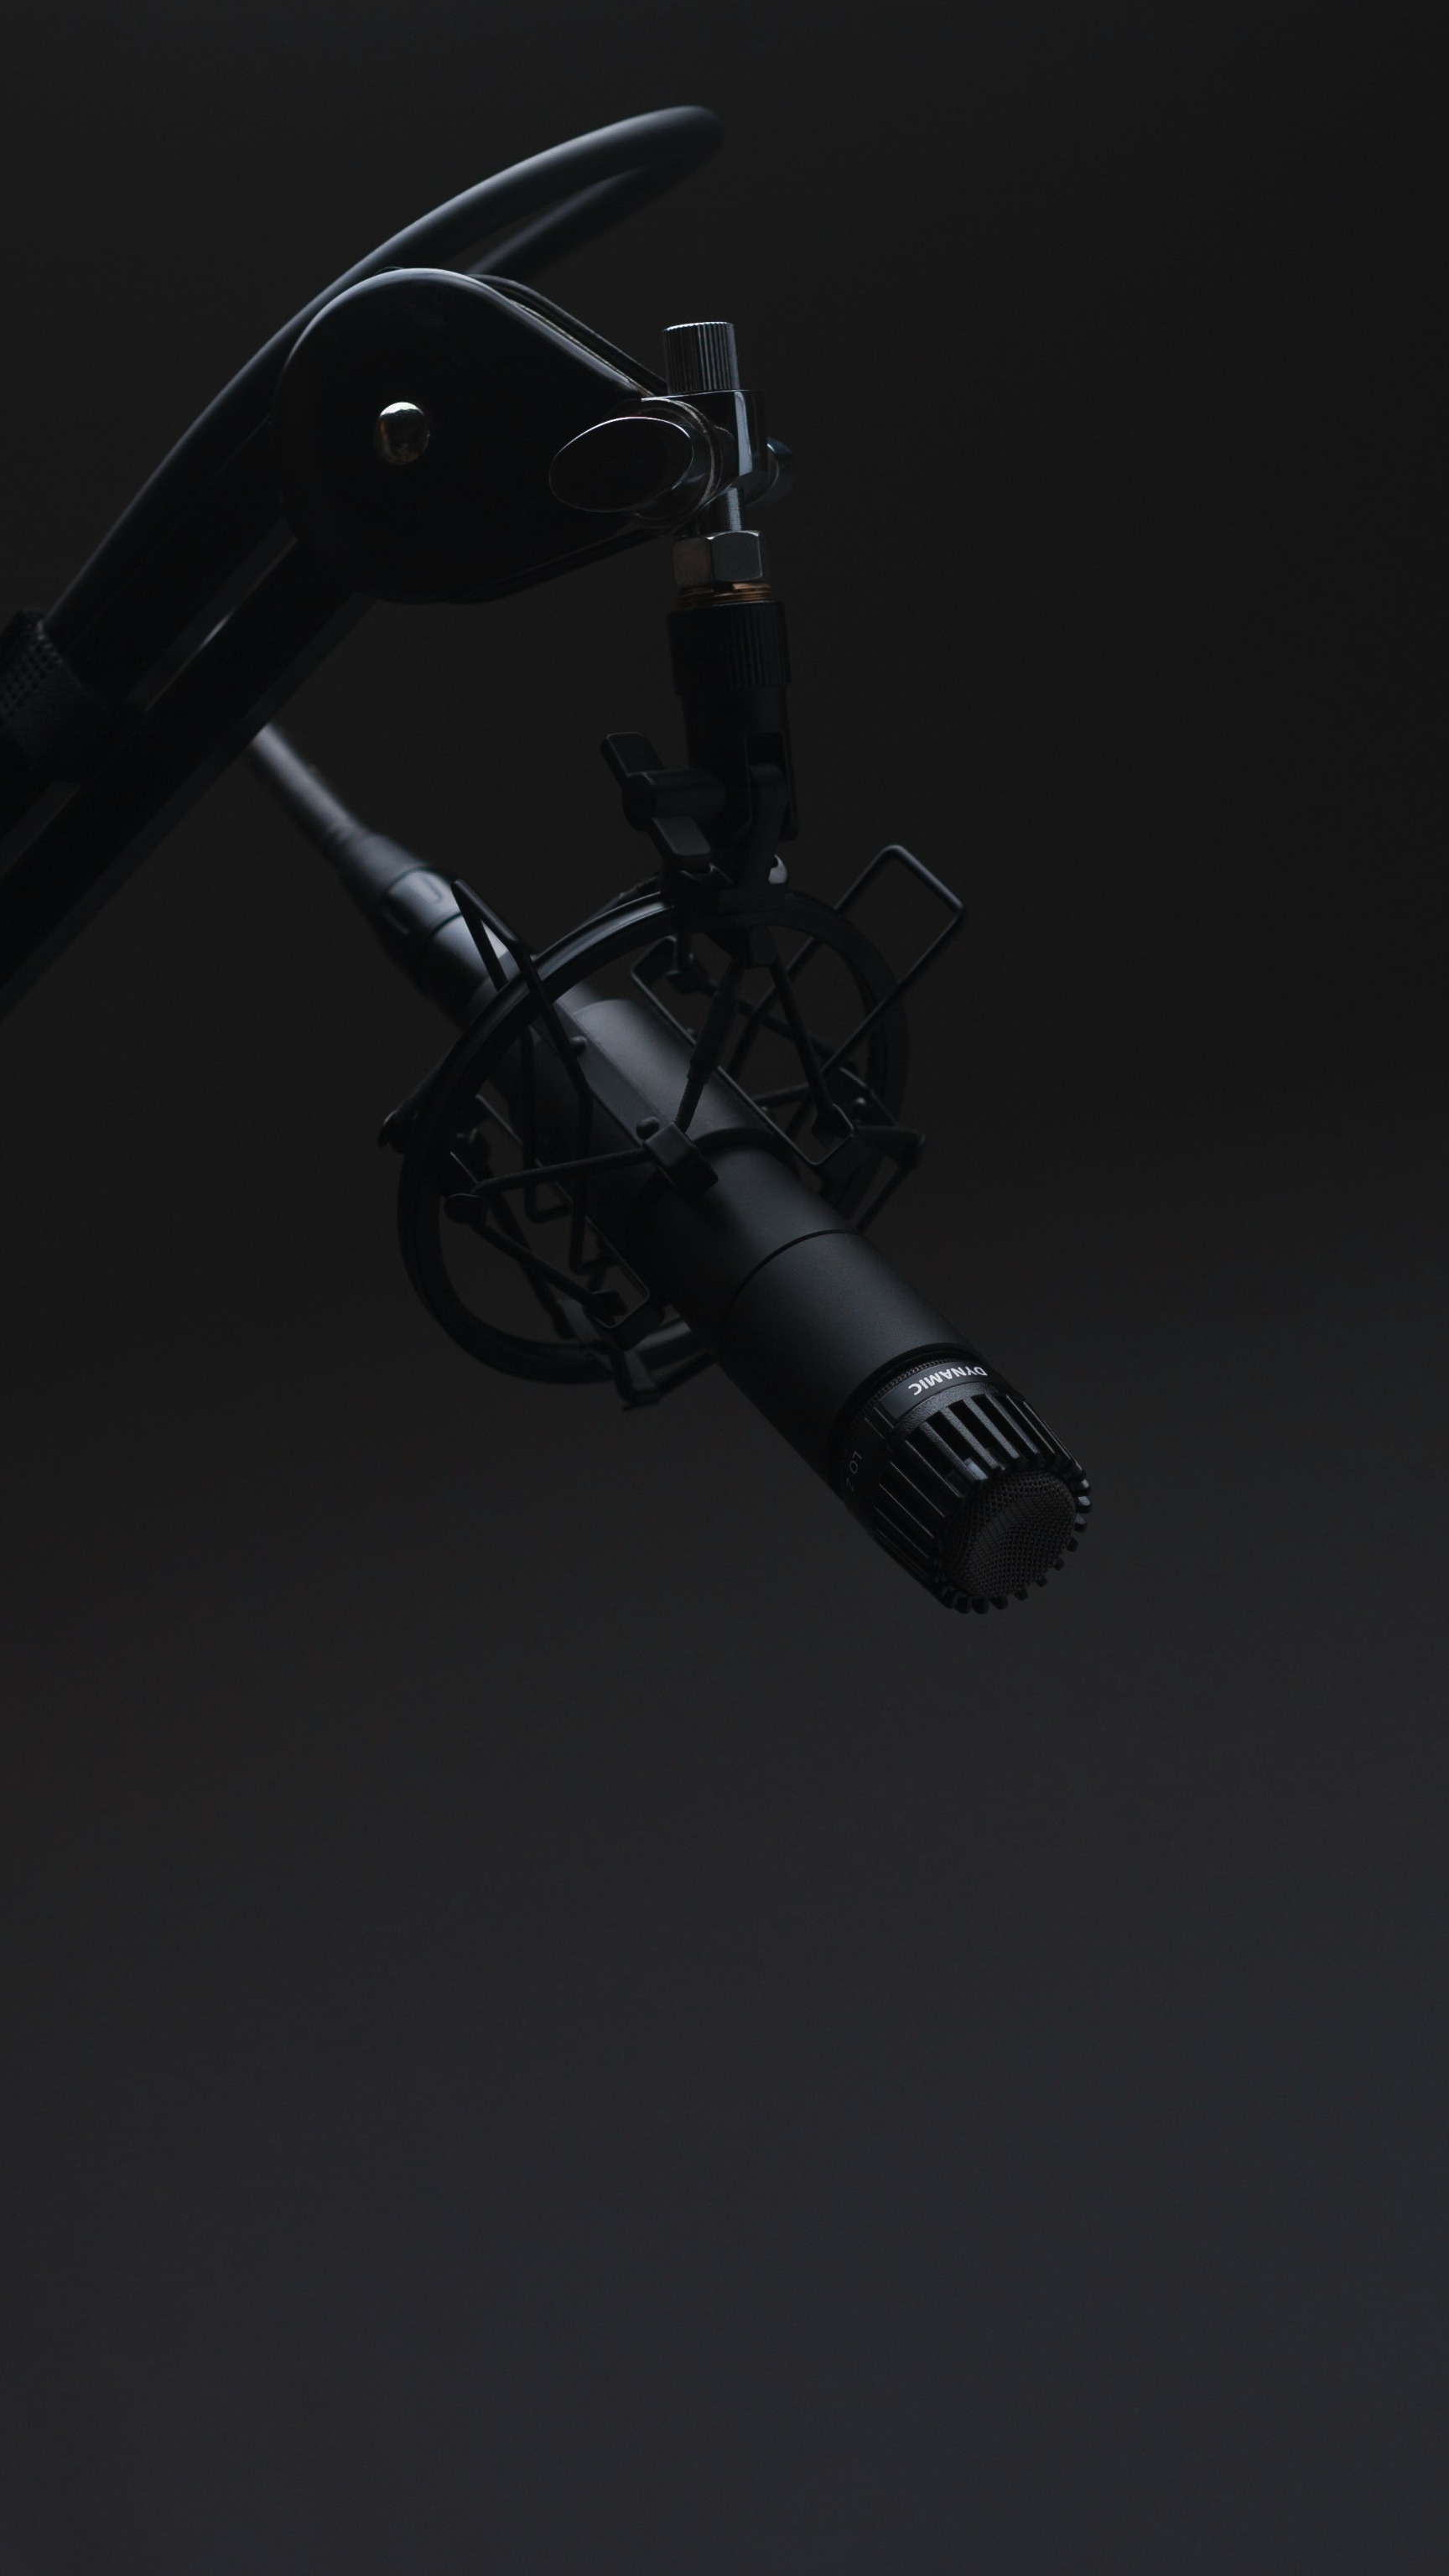 Microphone image